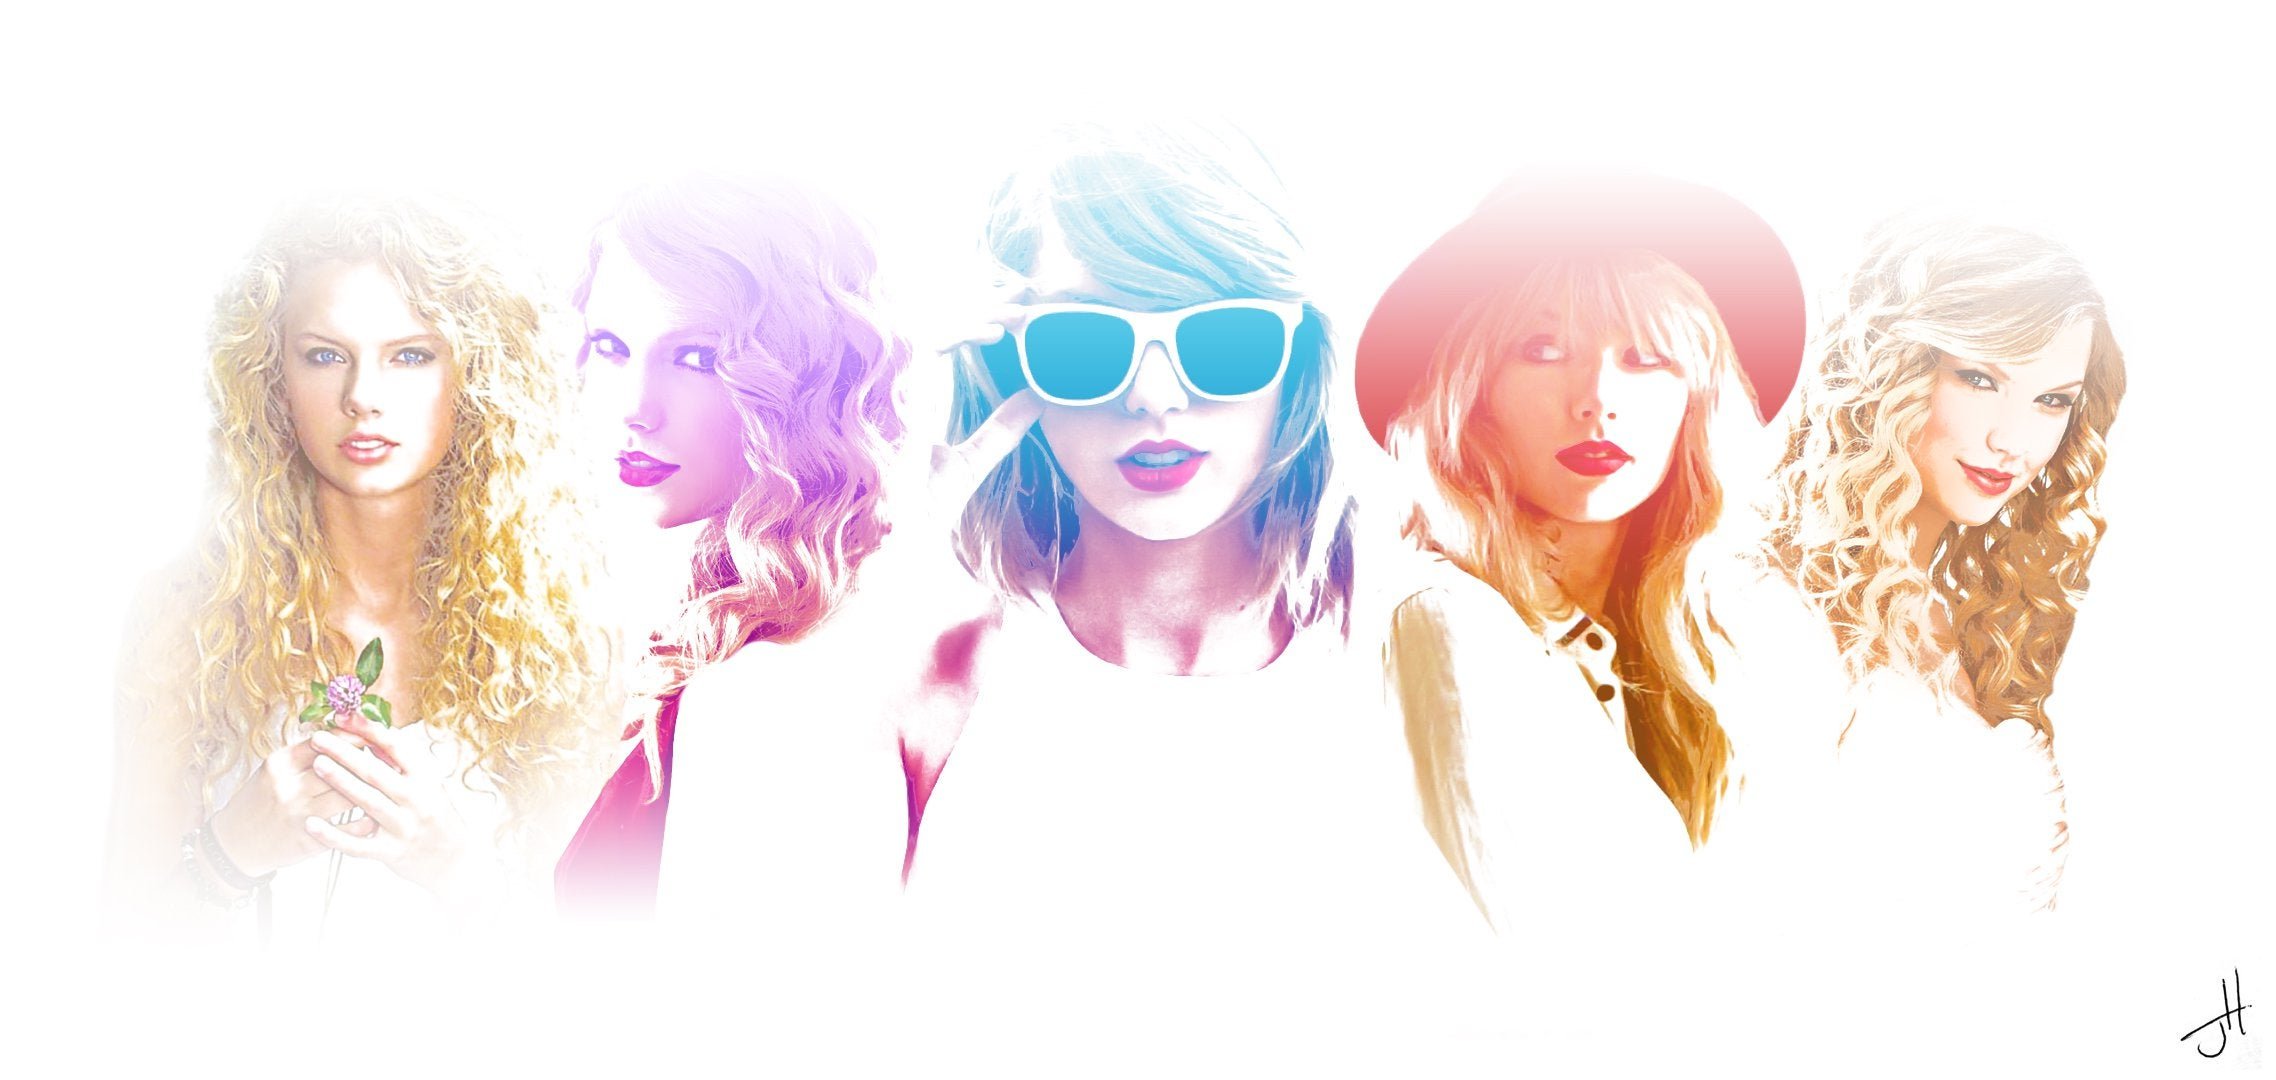 Taylor Swift Eras Tour Wallpapers Wallpaper Cave